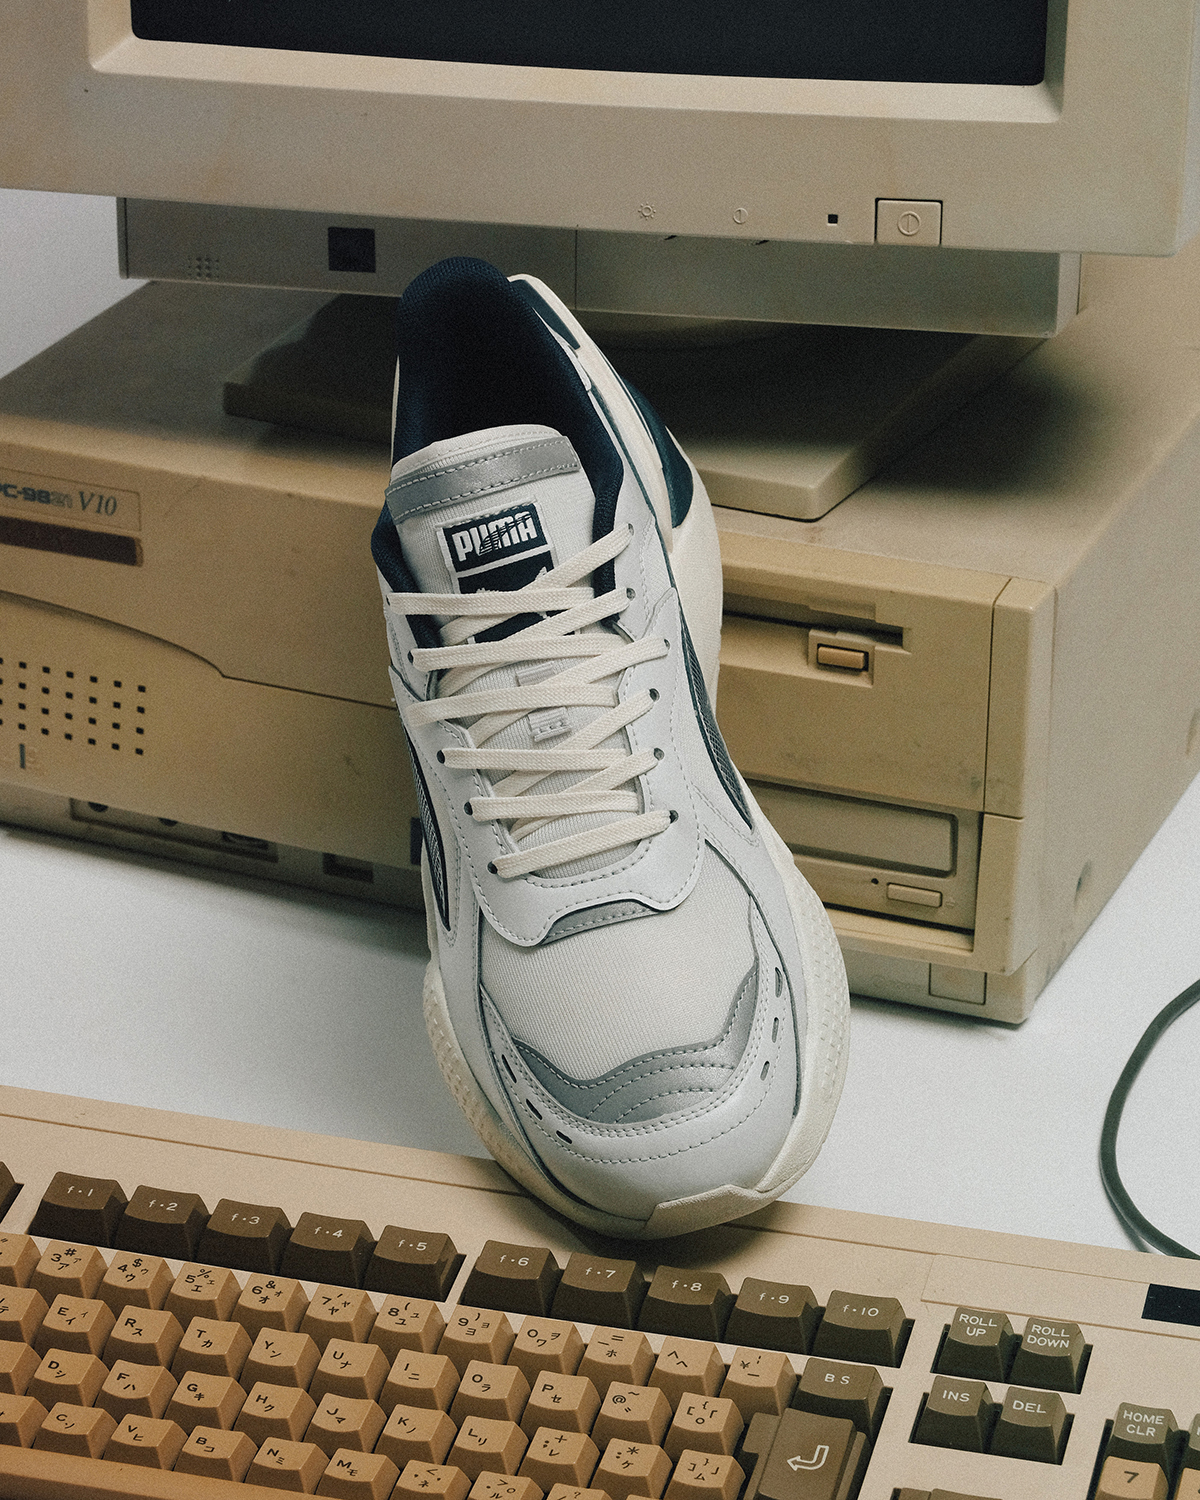 PUMA RS-X 40th Anniversary magforlia mita sneakers EXCLUSIVE